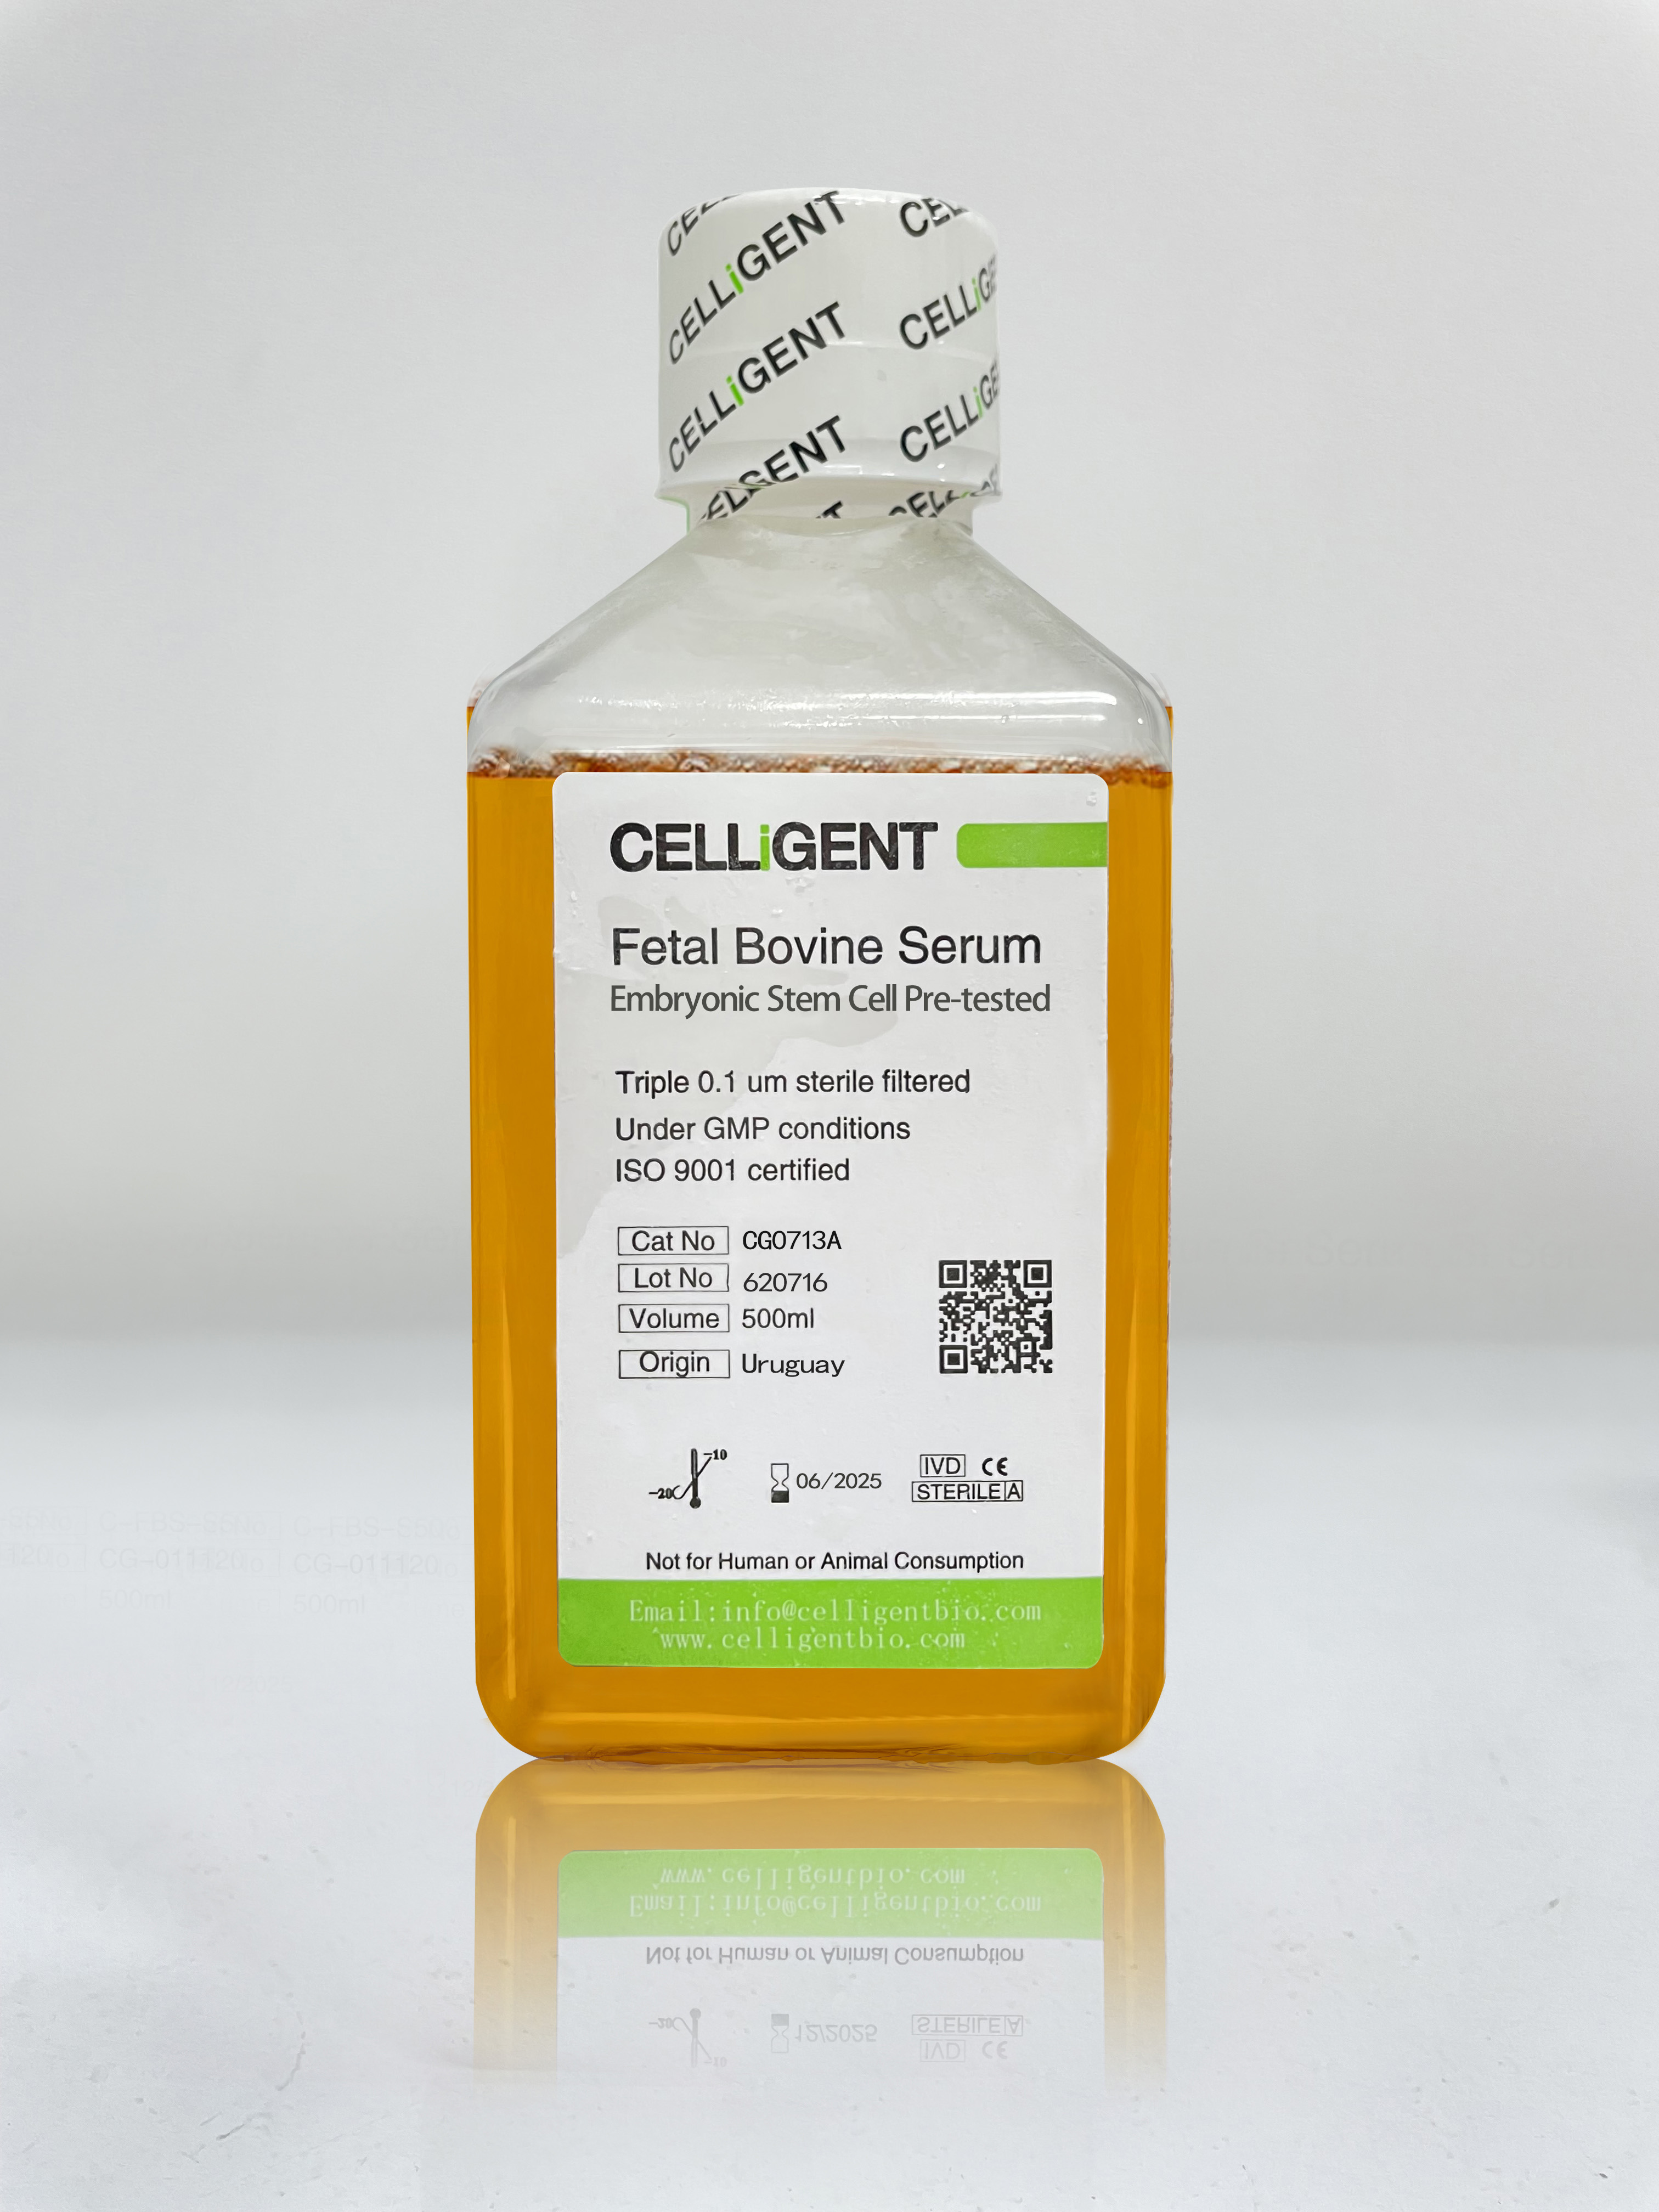 CELLiGENT ES cell pretested/干细胞专用胎牛血清CG0713A